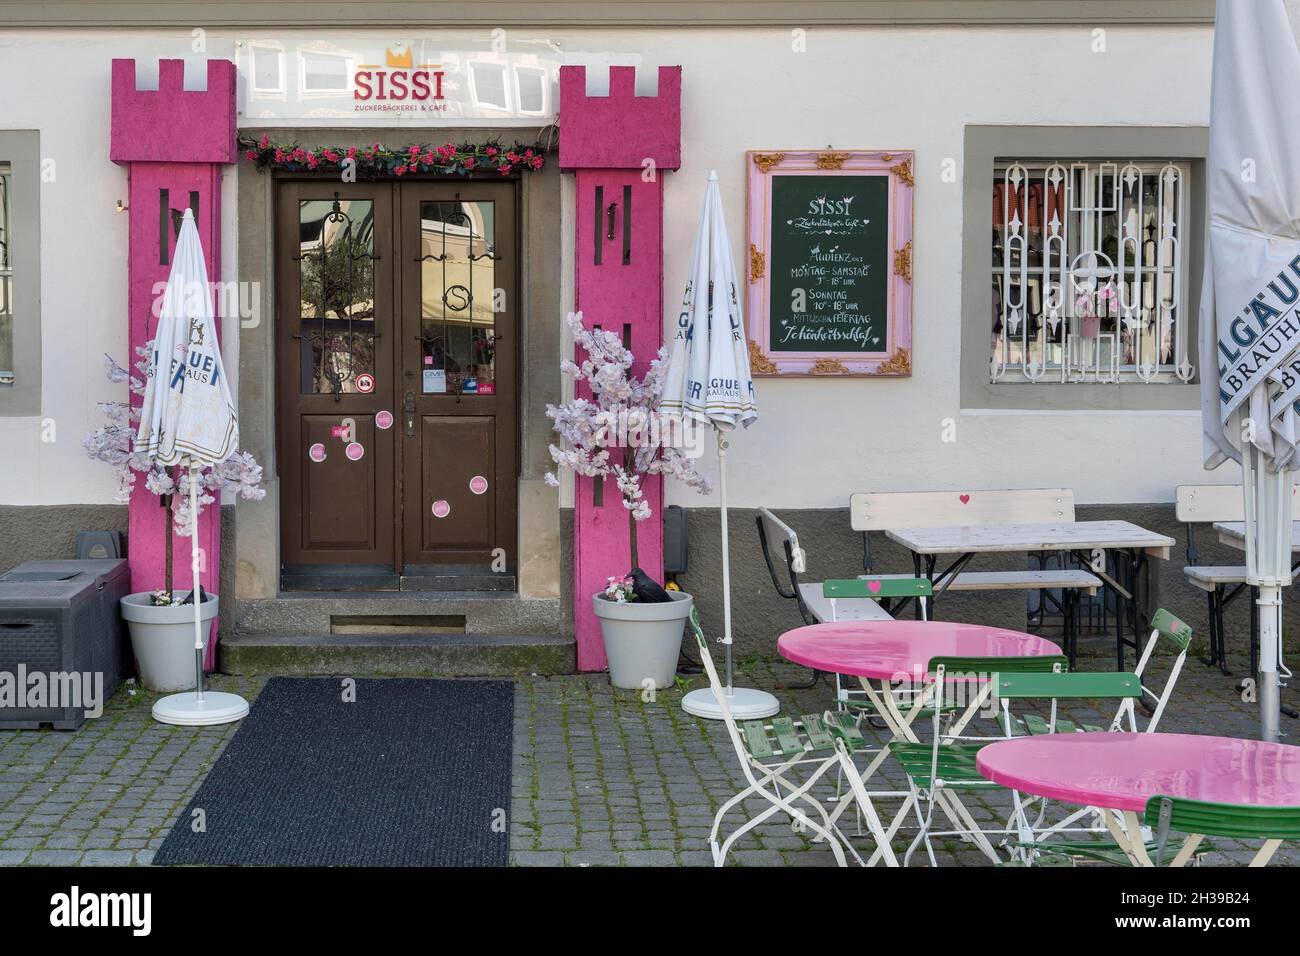 Sissi, Confectionery and Cafe, Kempten, Allgaeu, Bavaria, Germany Stock Photo